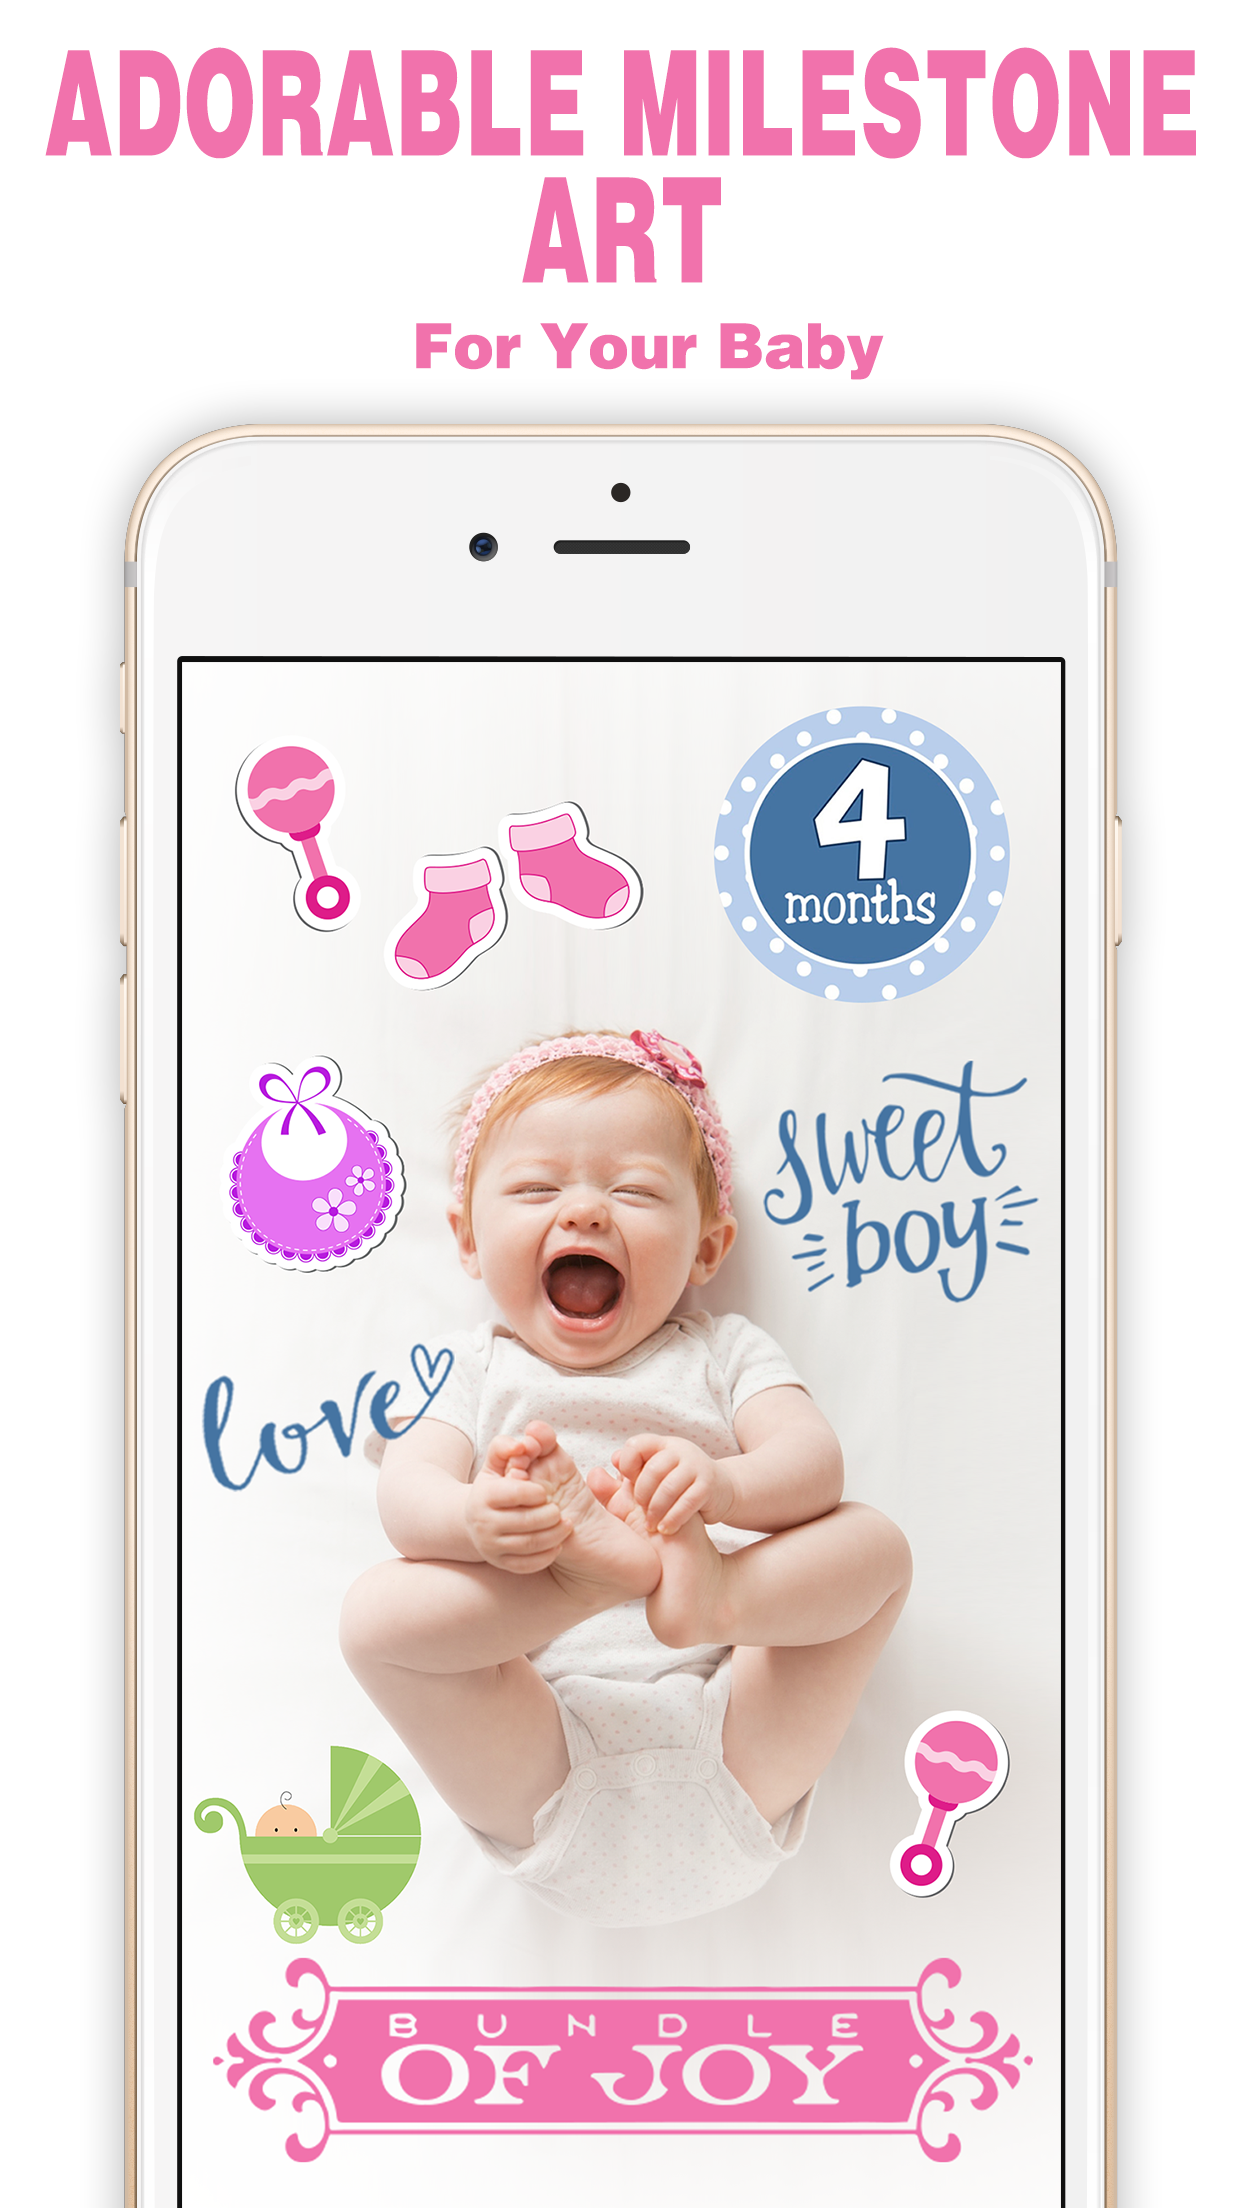 Baby Photo Editor mobile screen shot image